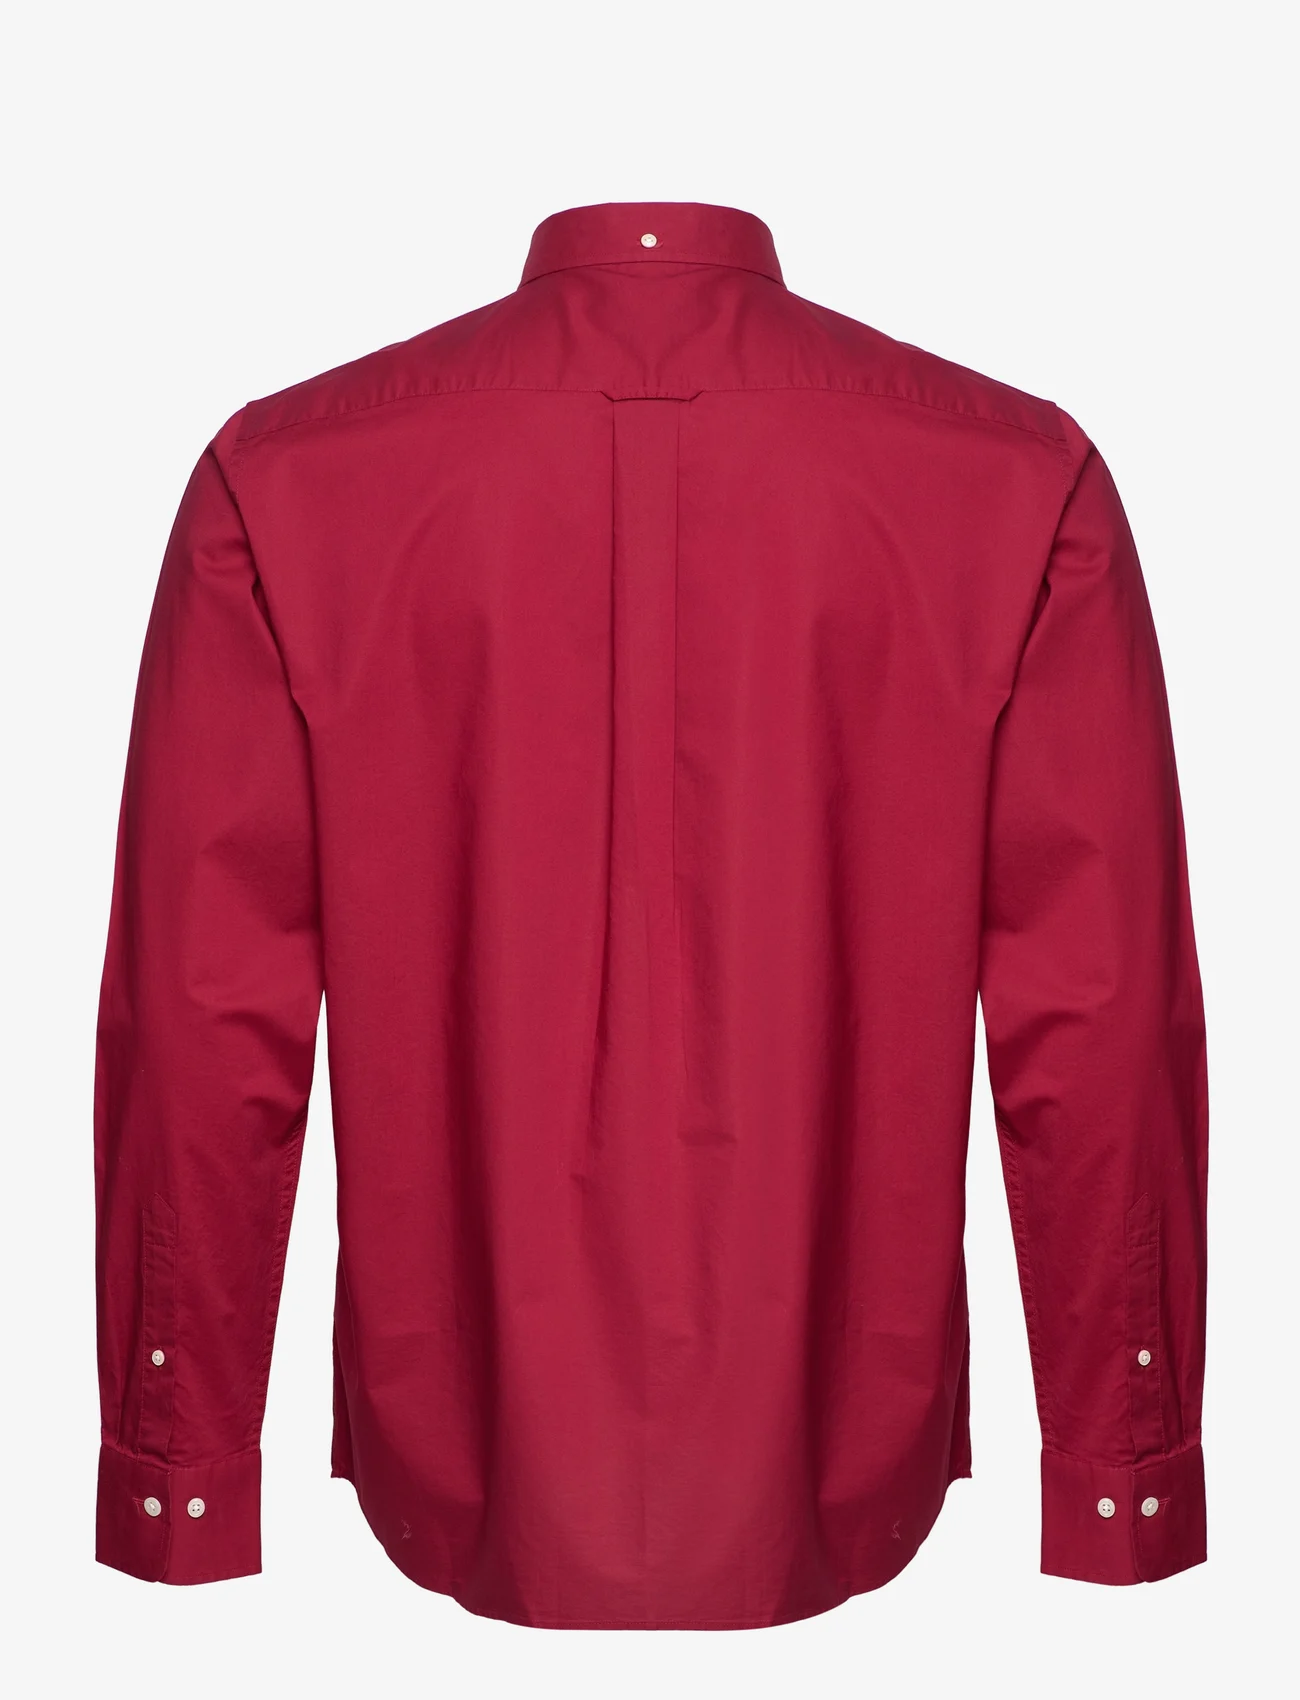 GANT - REG BROADCLOTH BD - basic shirts - plumped red - 1